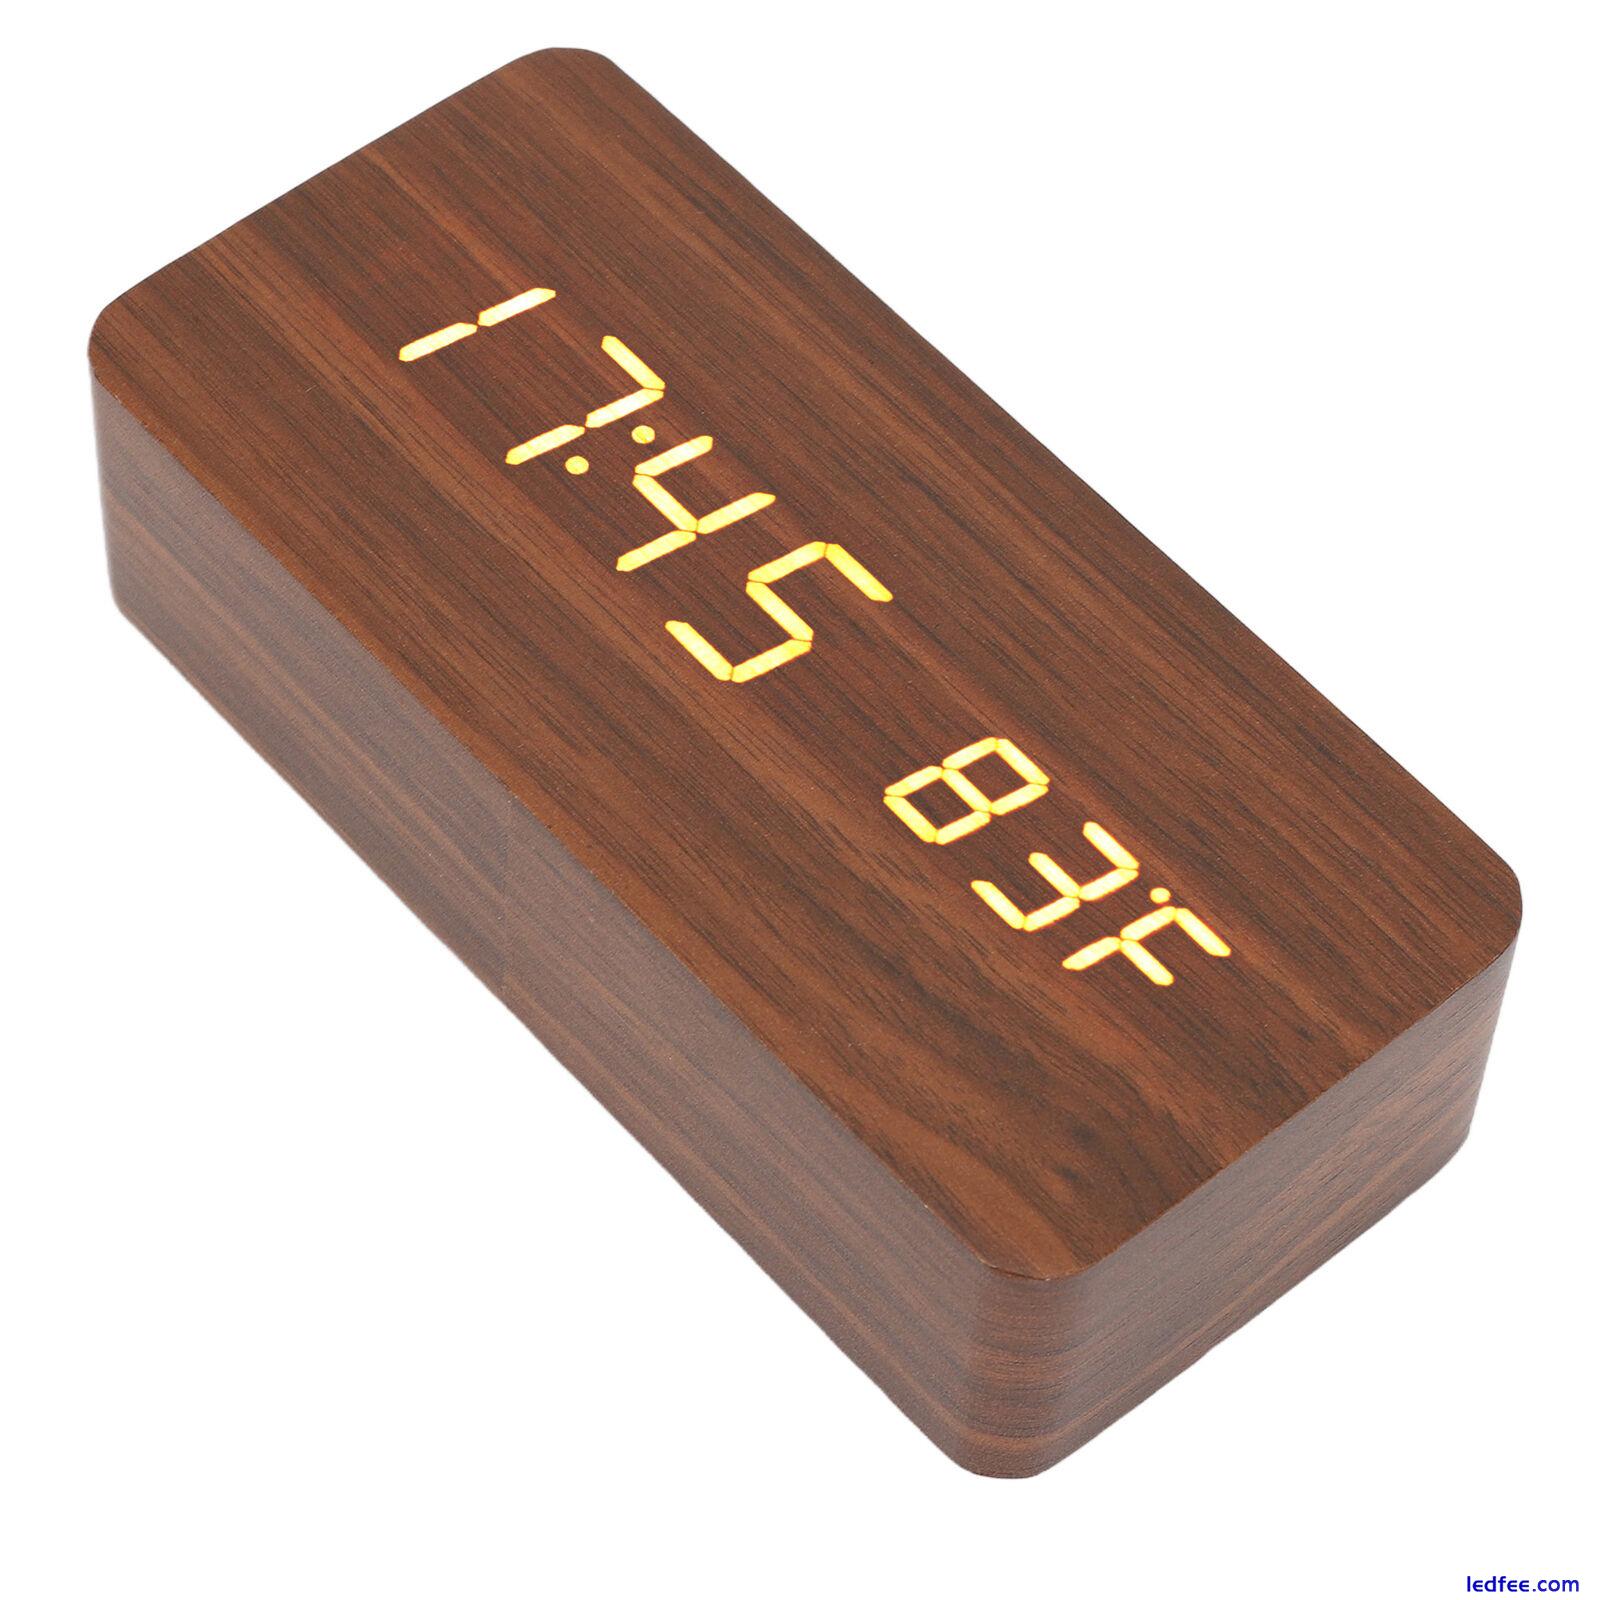 LED Wood Digital Alarm Clock 3 Level Brightness Electronic Clock WAS 3 